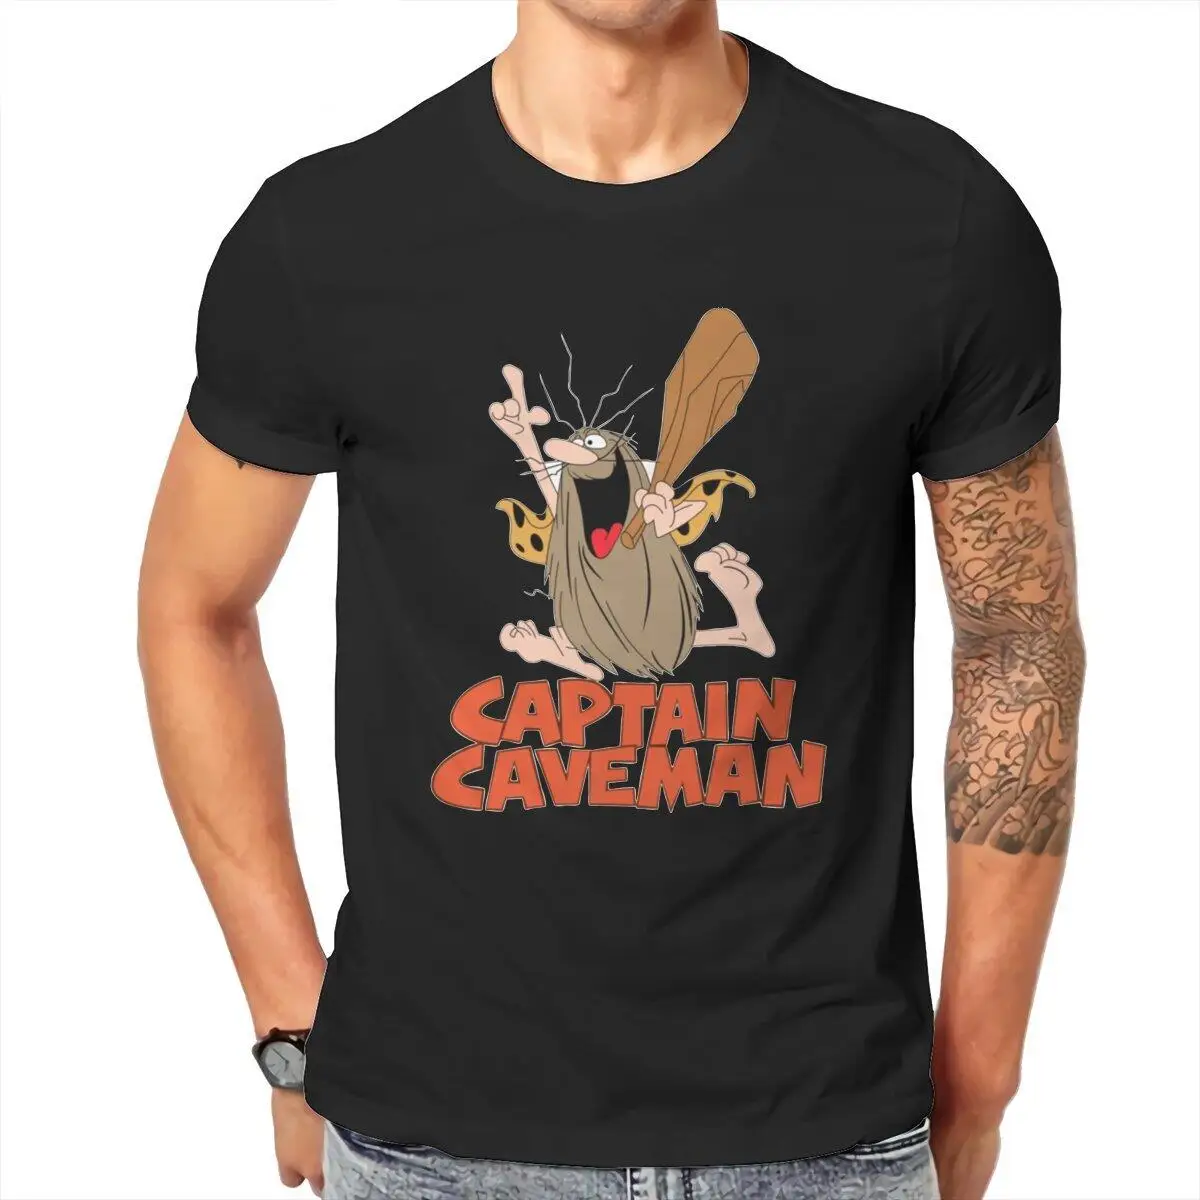 Funny Captain Caveman Cartoon T-Shirts for Men Round Collar 100% Cotton T Shirt  Short Sleeve Tees Printed Clothing